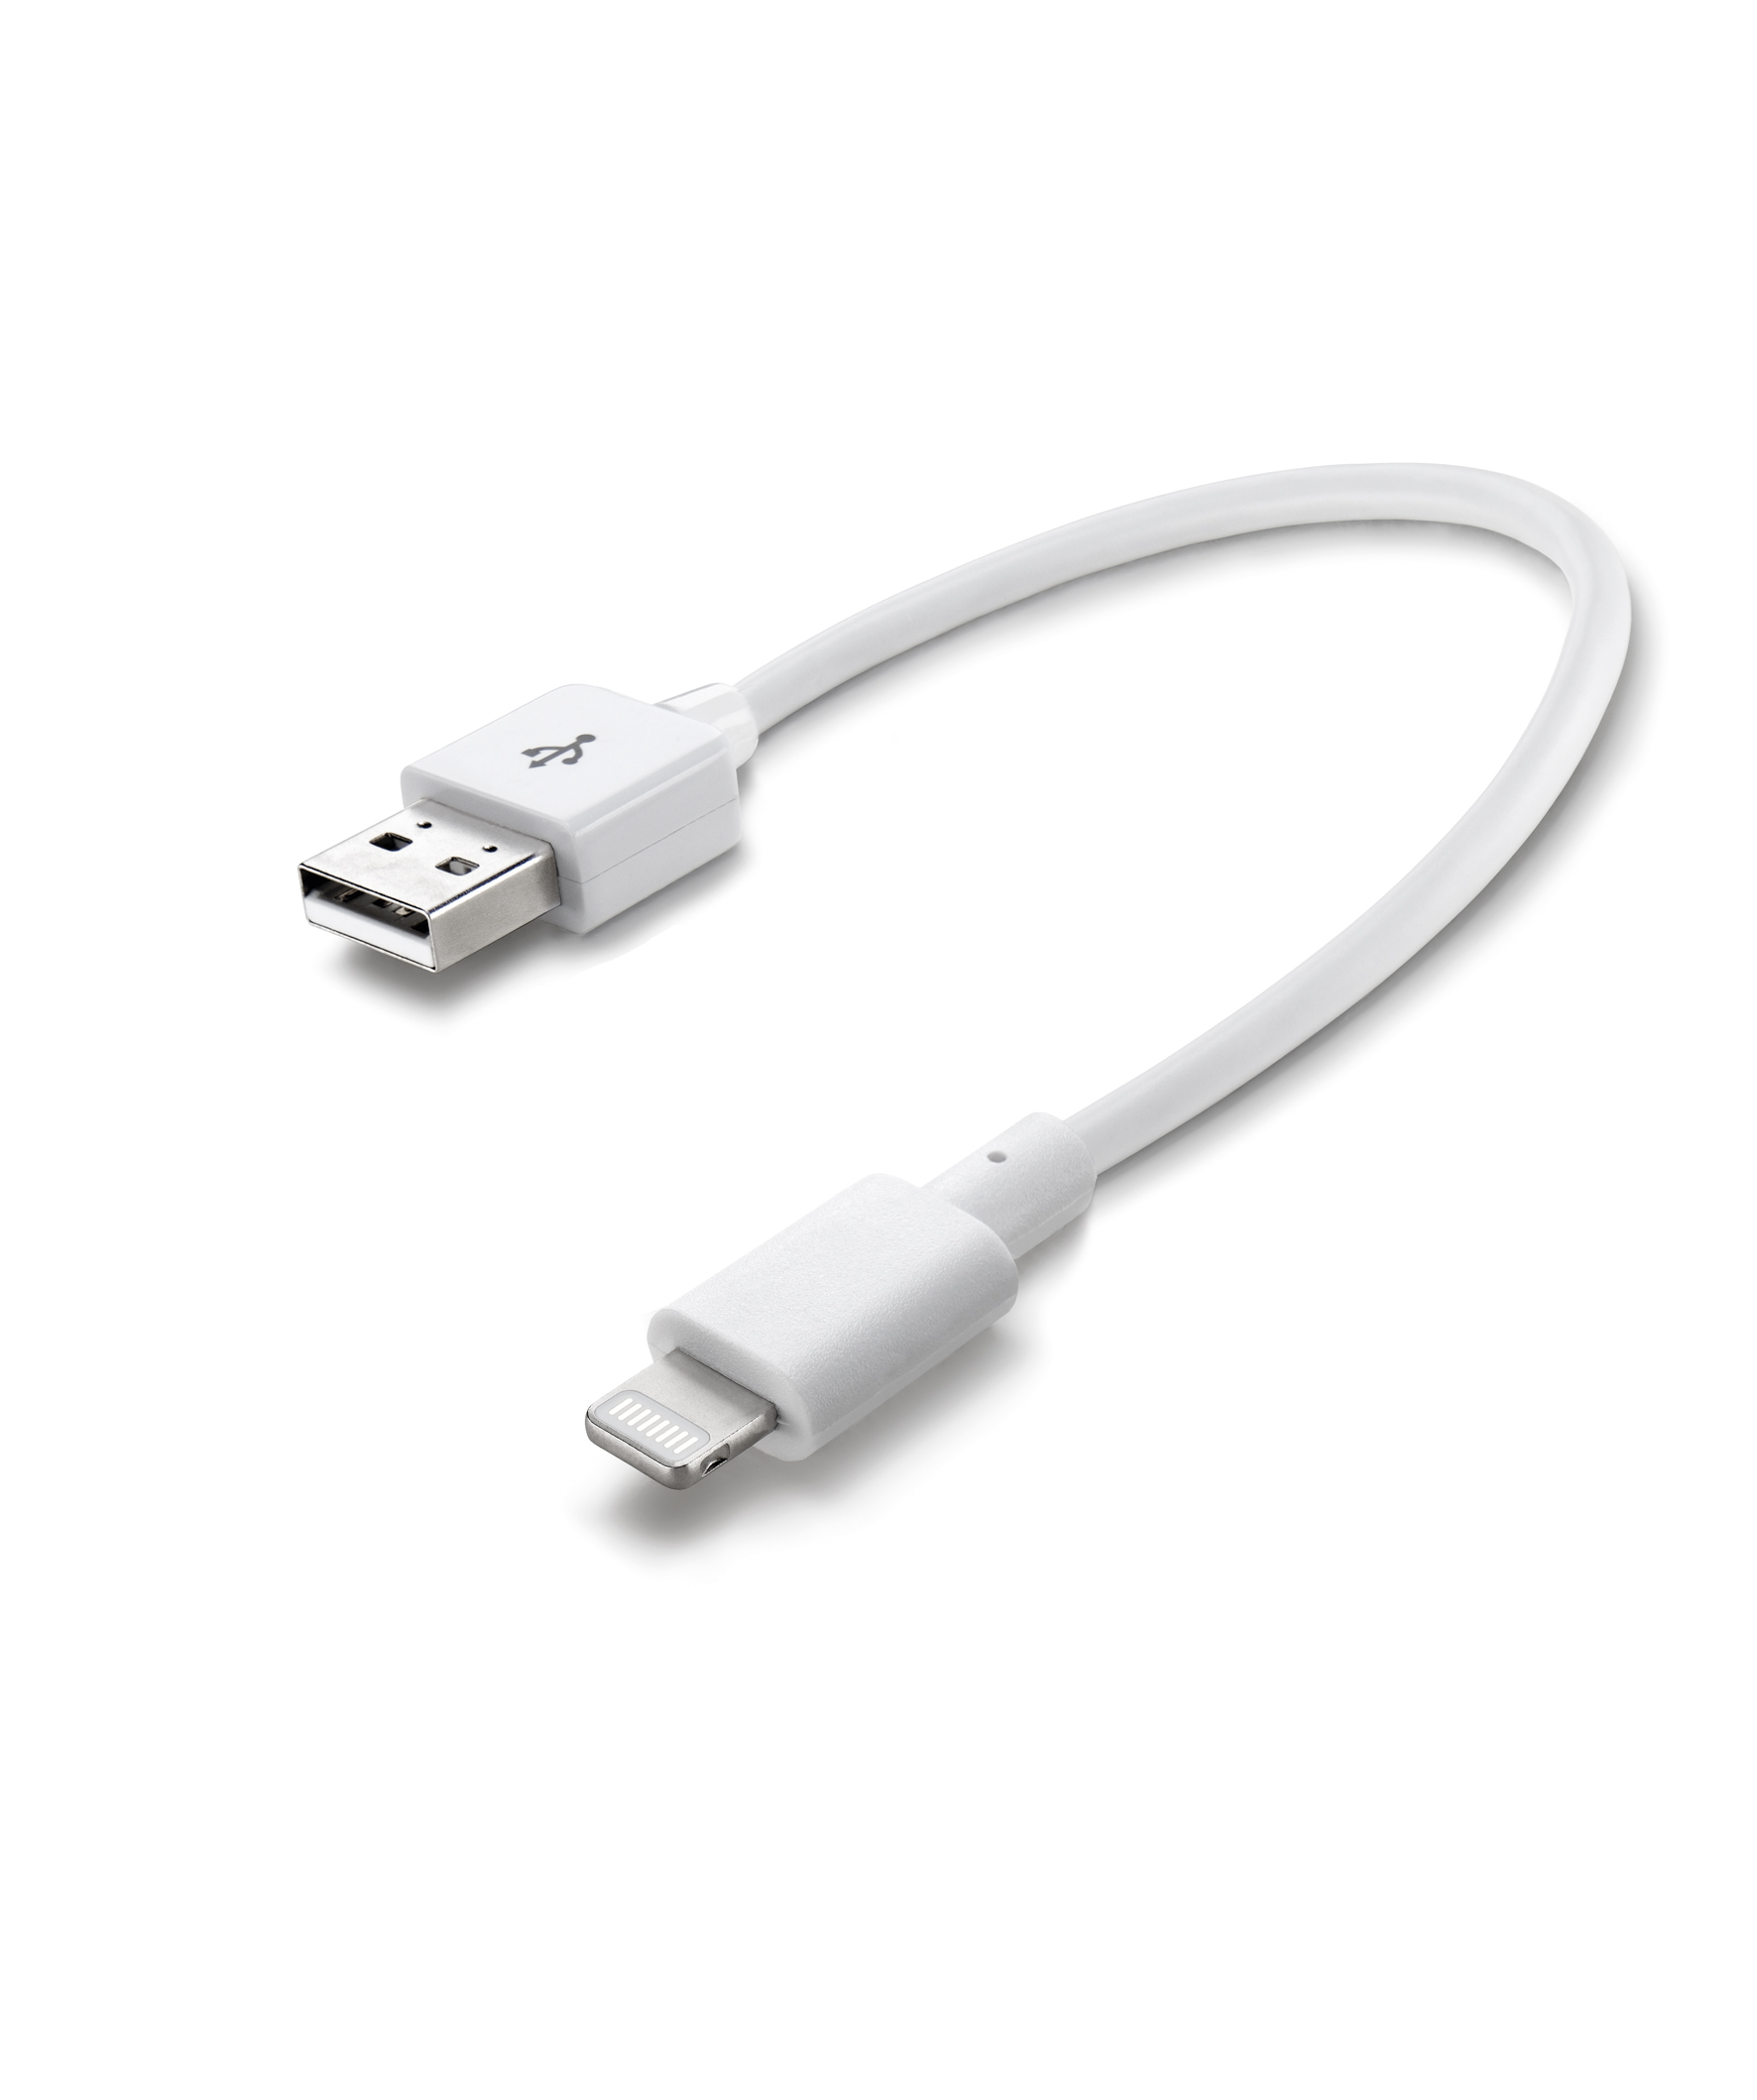 Data kabel travel, Apple lightning (15cm), wit